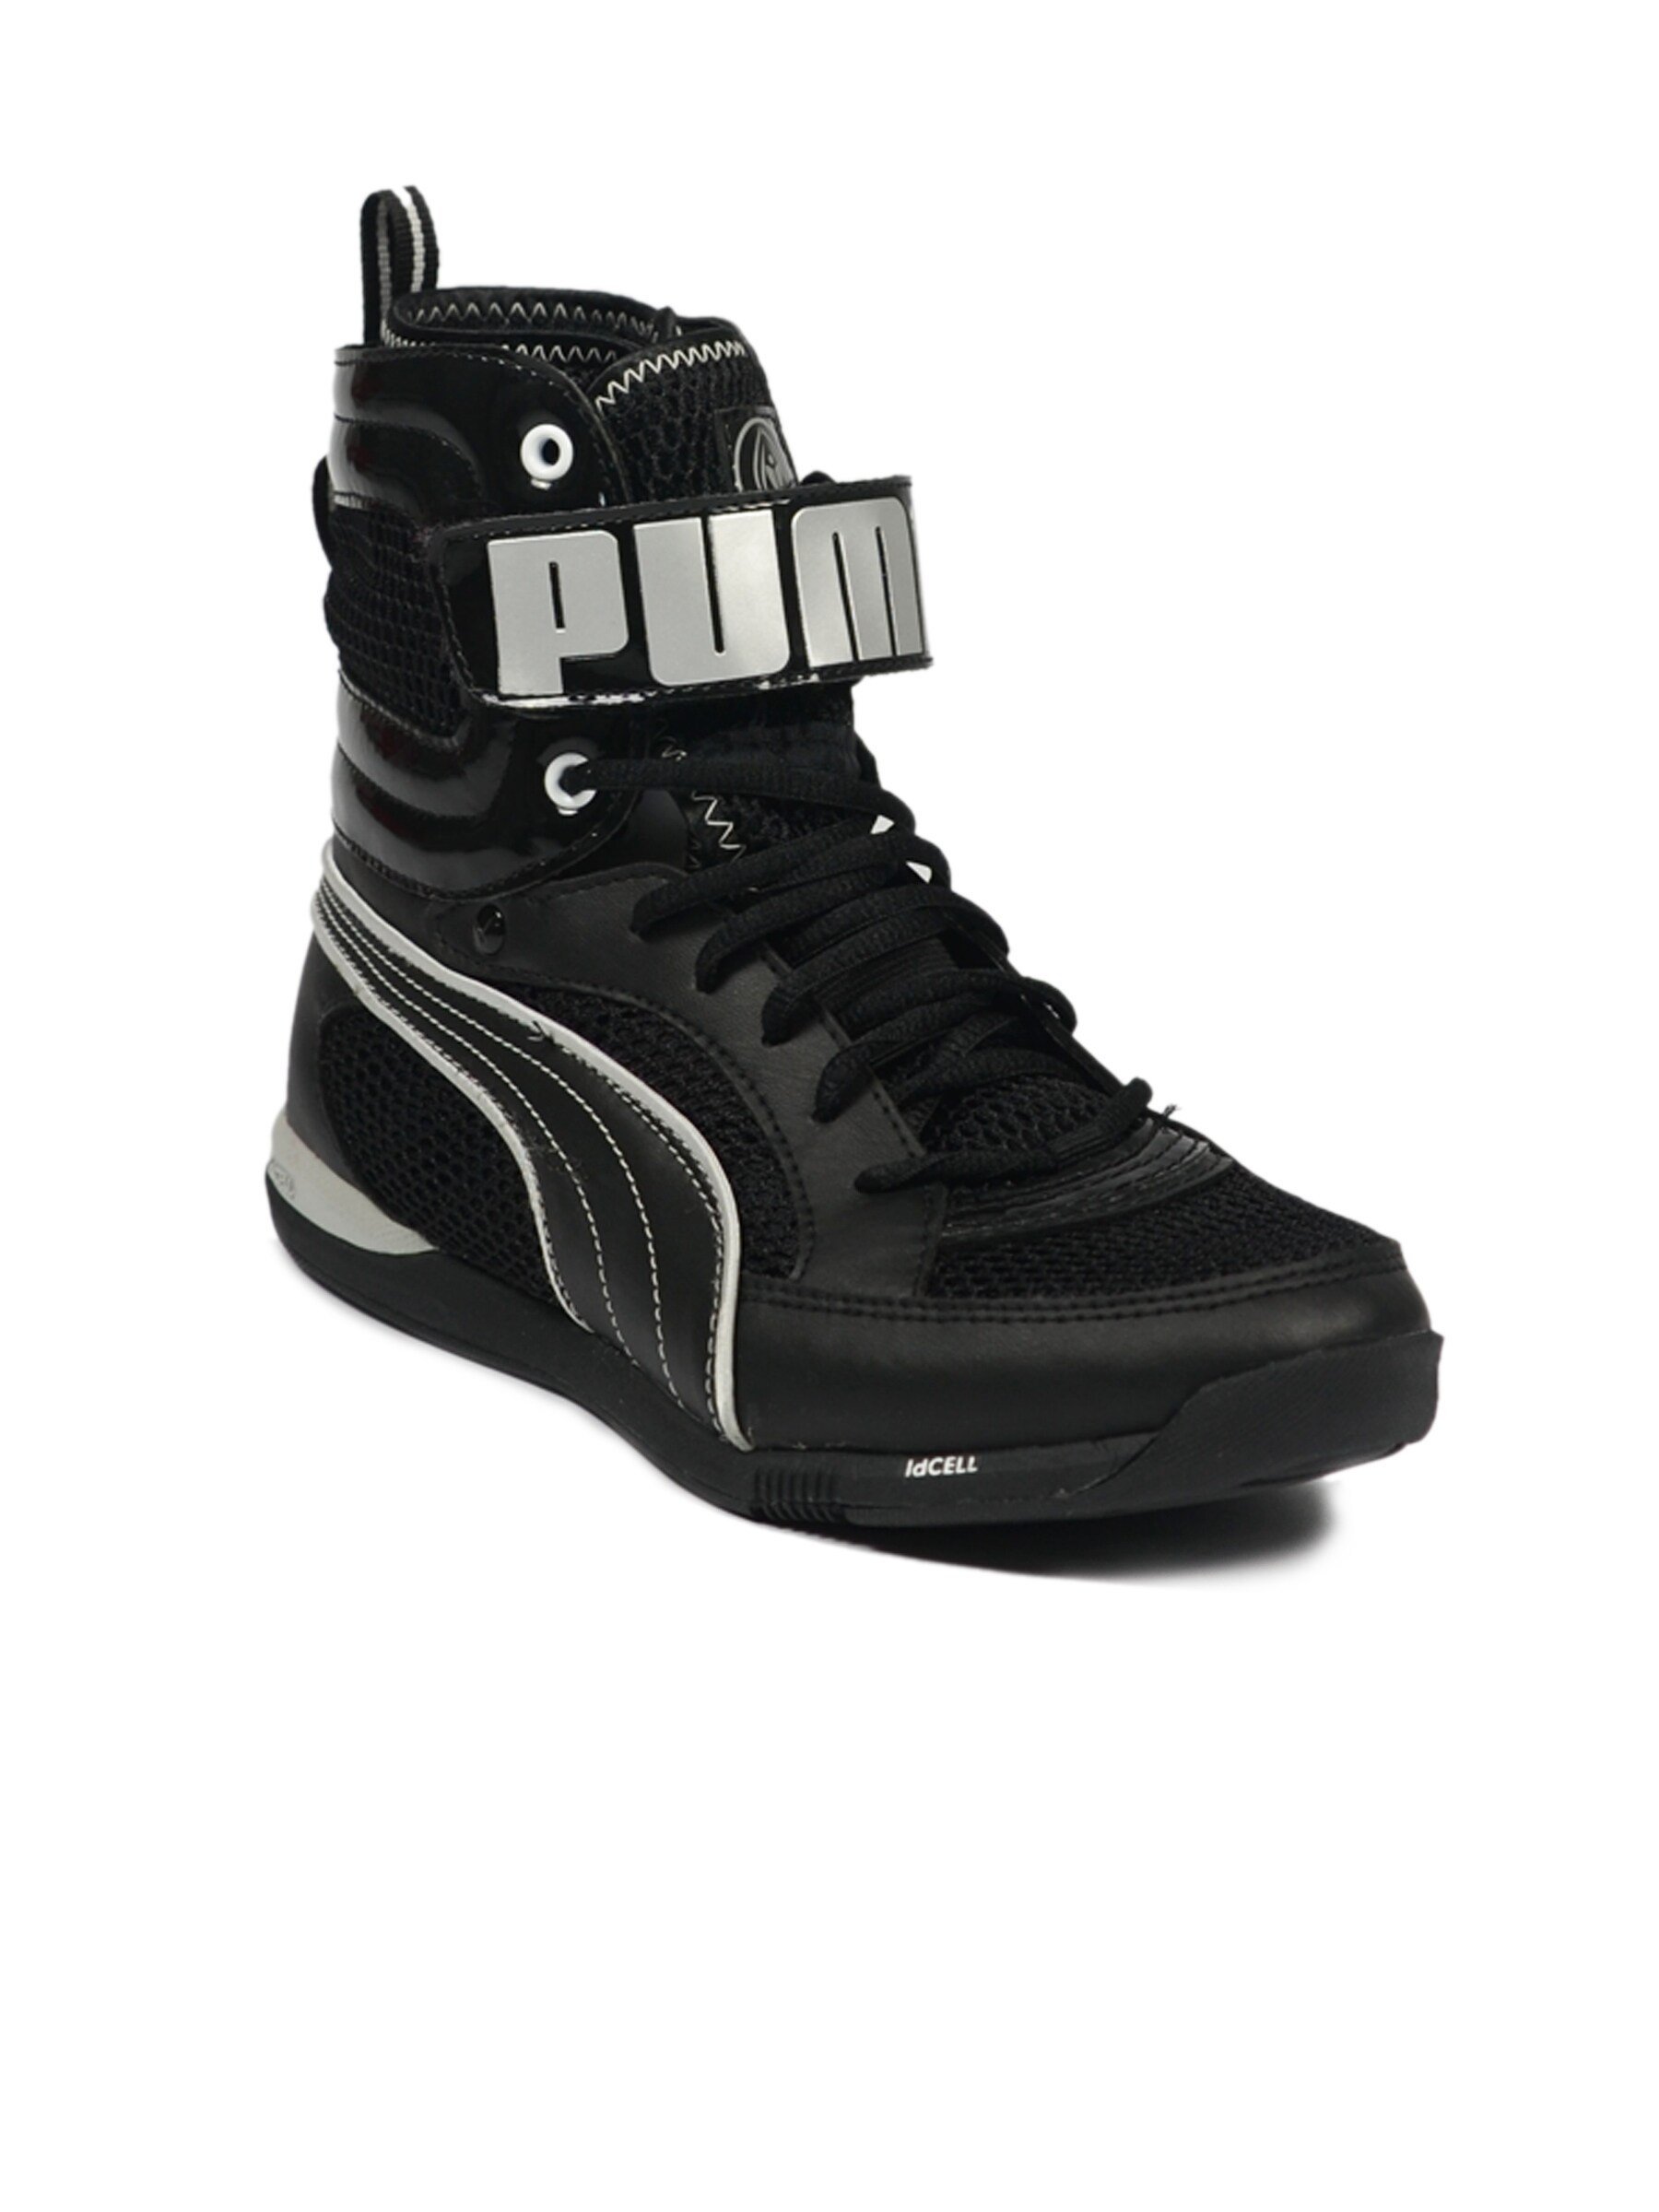 Puma Men's Allegra Mid Black Silver Shoe